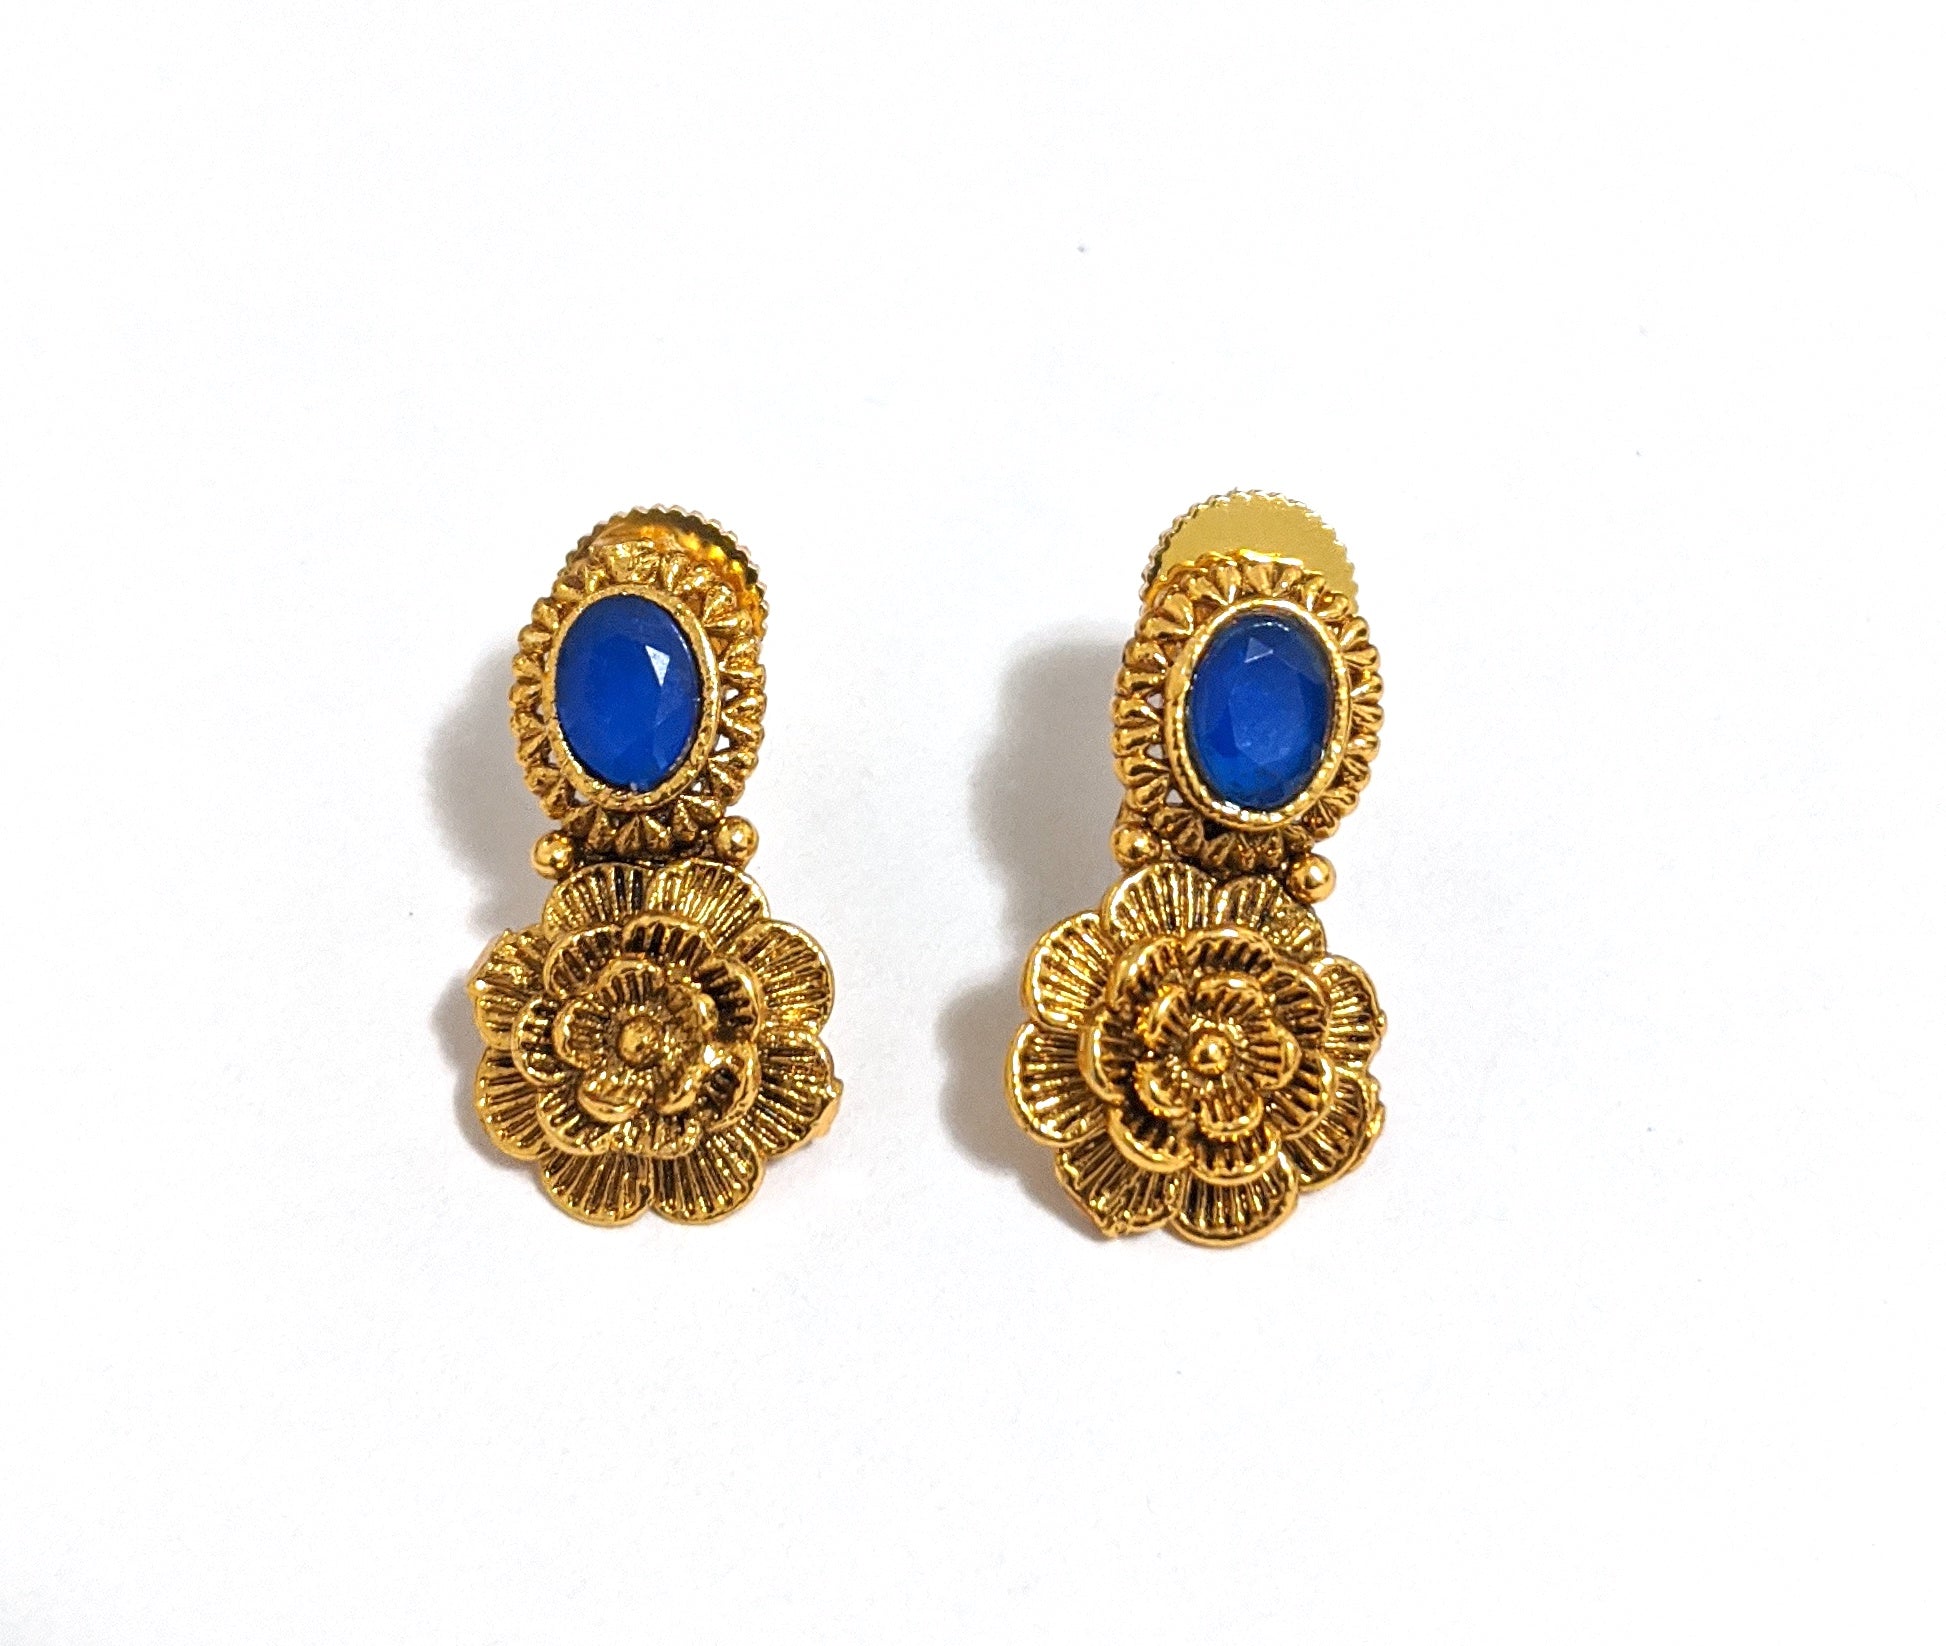 Rose flower small stud earrings with polki stone - Simpliful